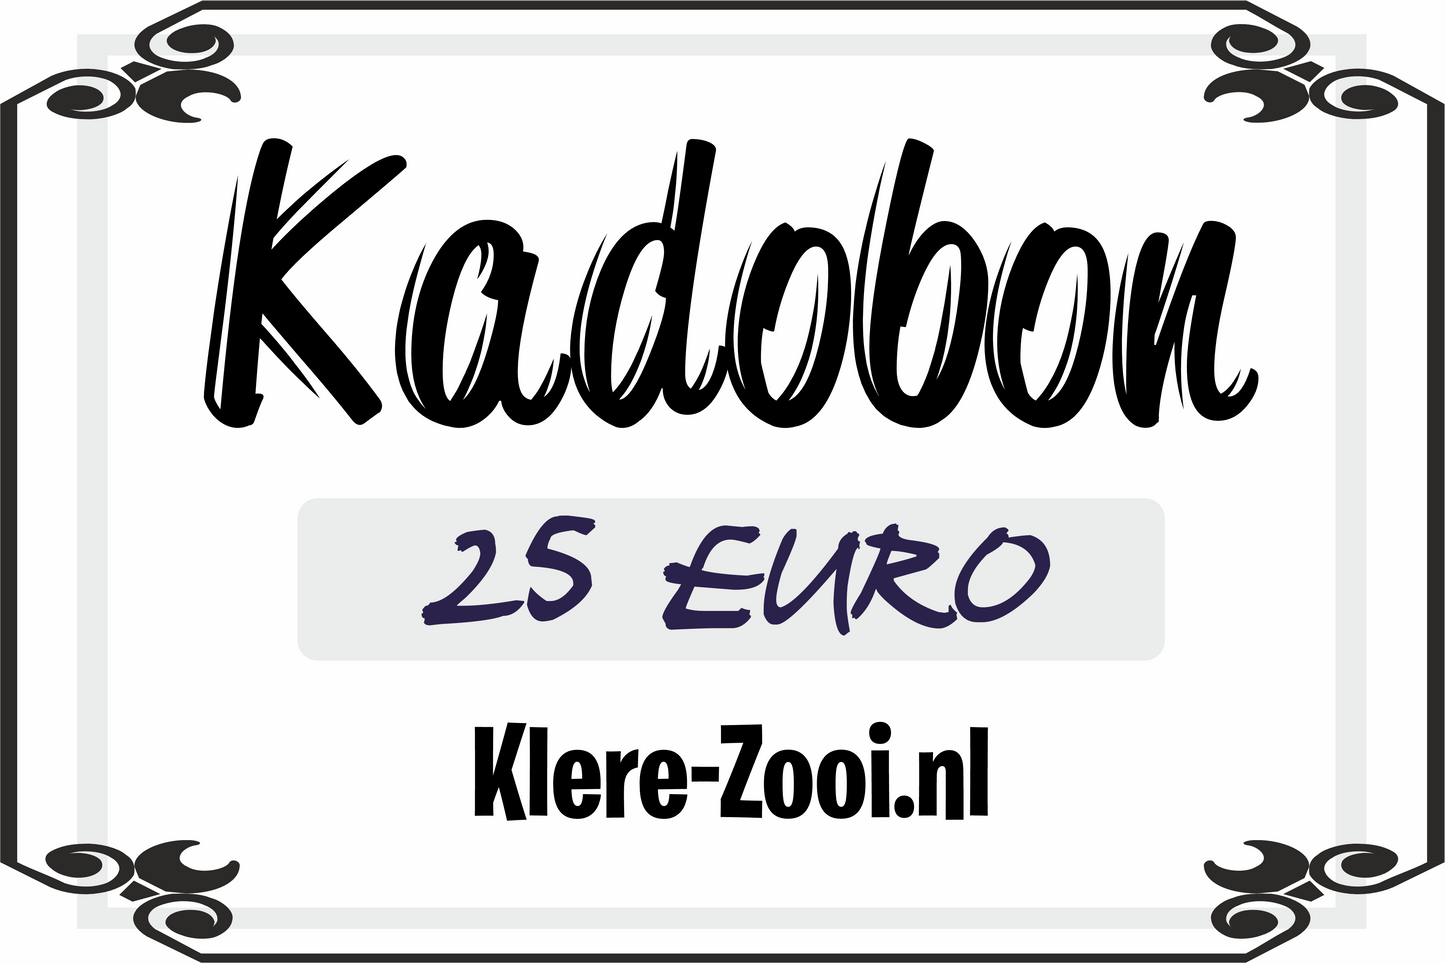 Klere-Zooi.nl Kadobon - € 25,00